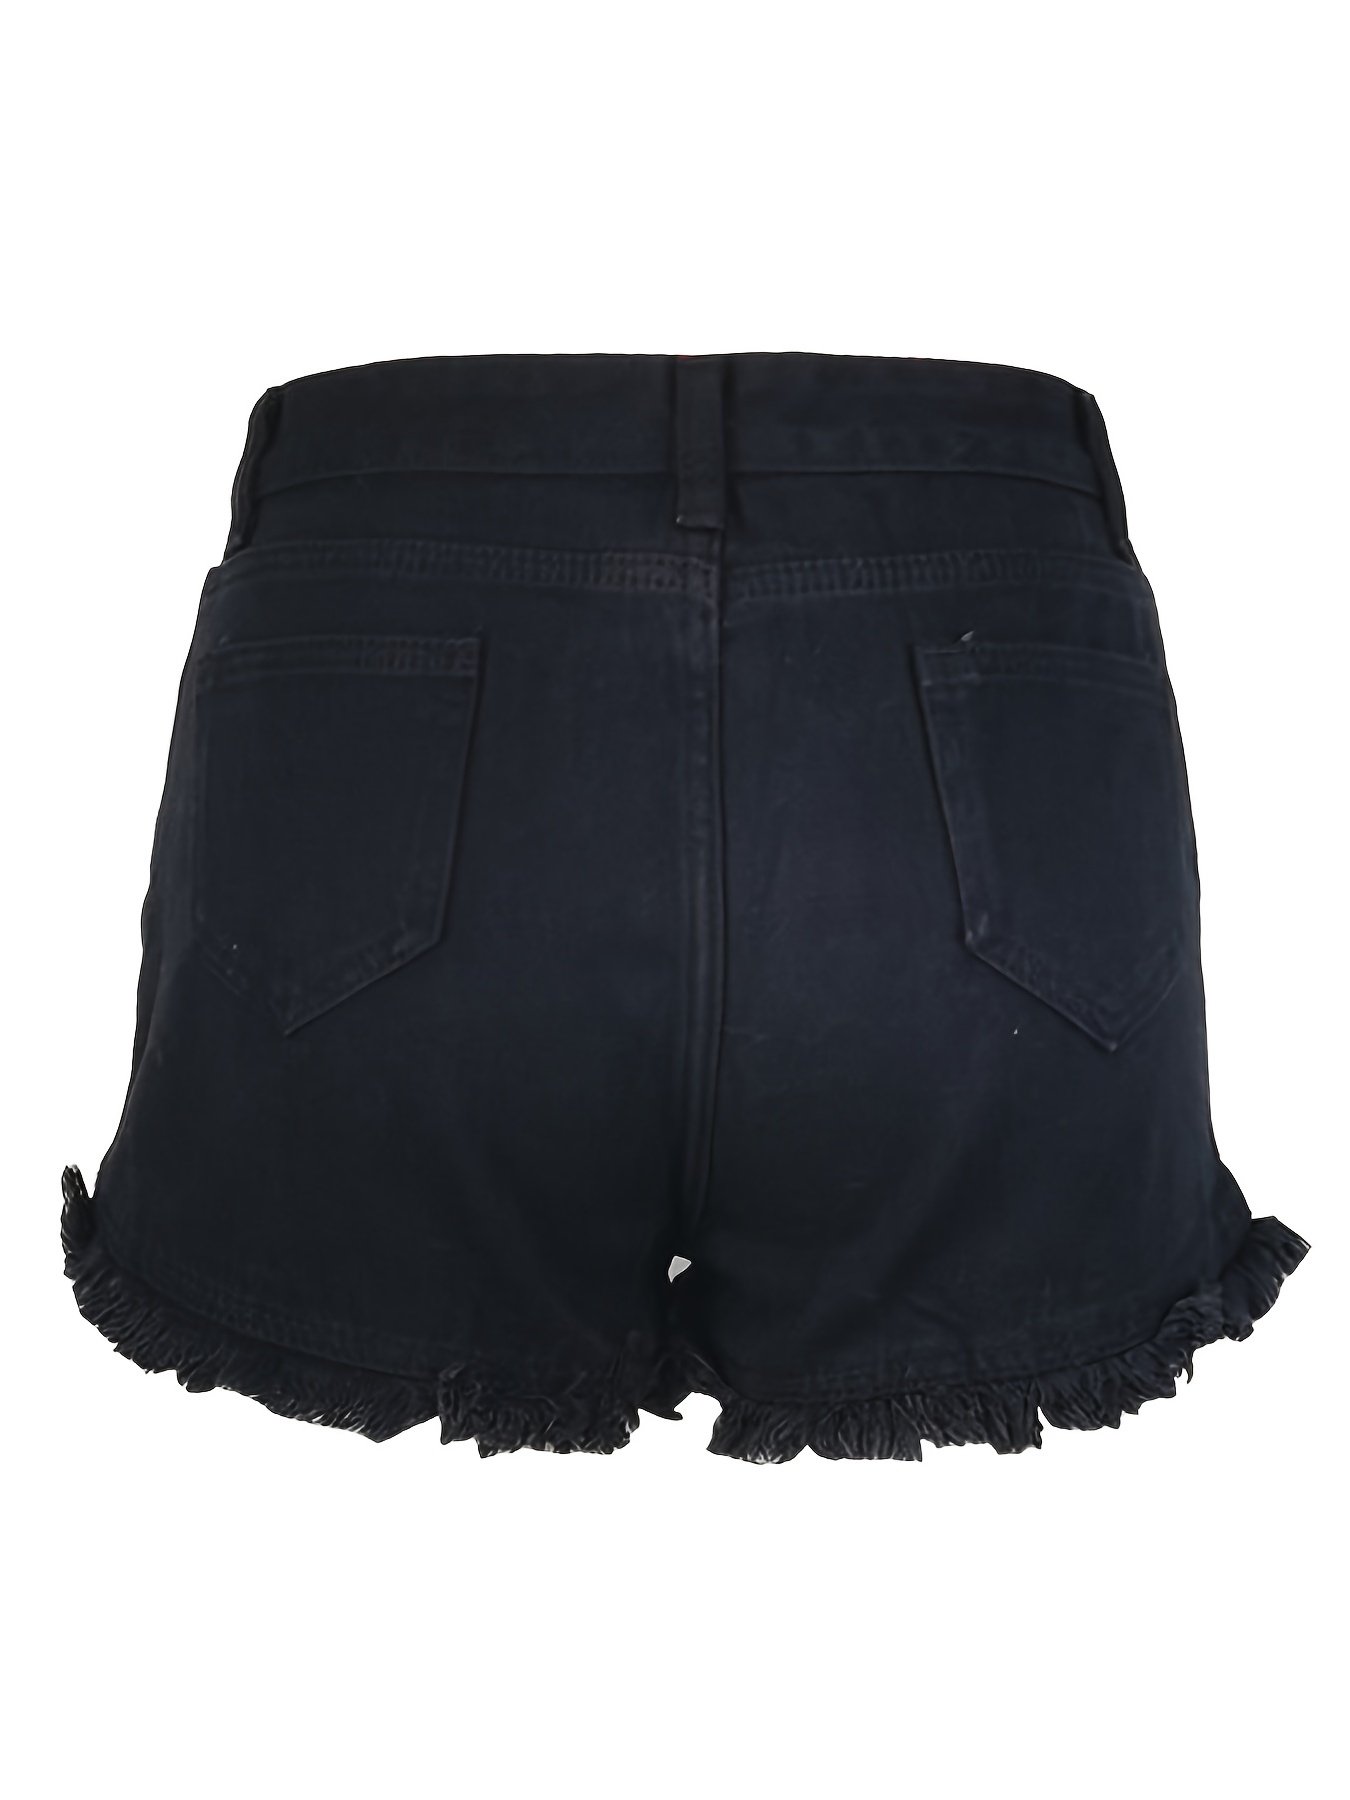 WSSBK Denim Shorts Women's Slim Fit Pants Summer Back Hollow Out High Waist  Tight Female Elastic Short Jeans (Color : Black, Size : XL code) price in  UAE,  UAE